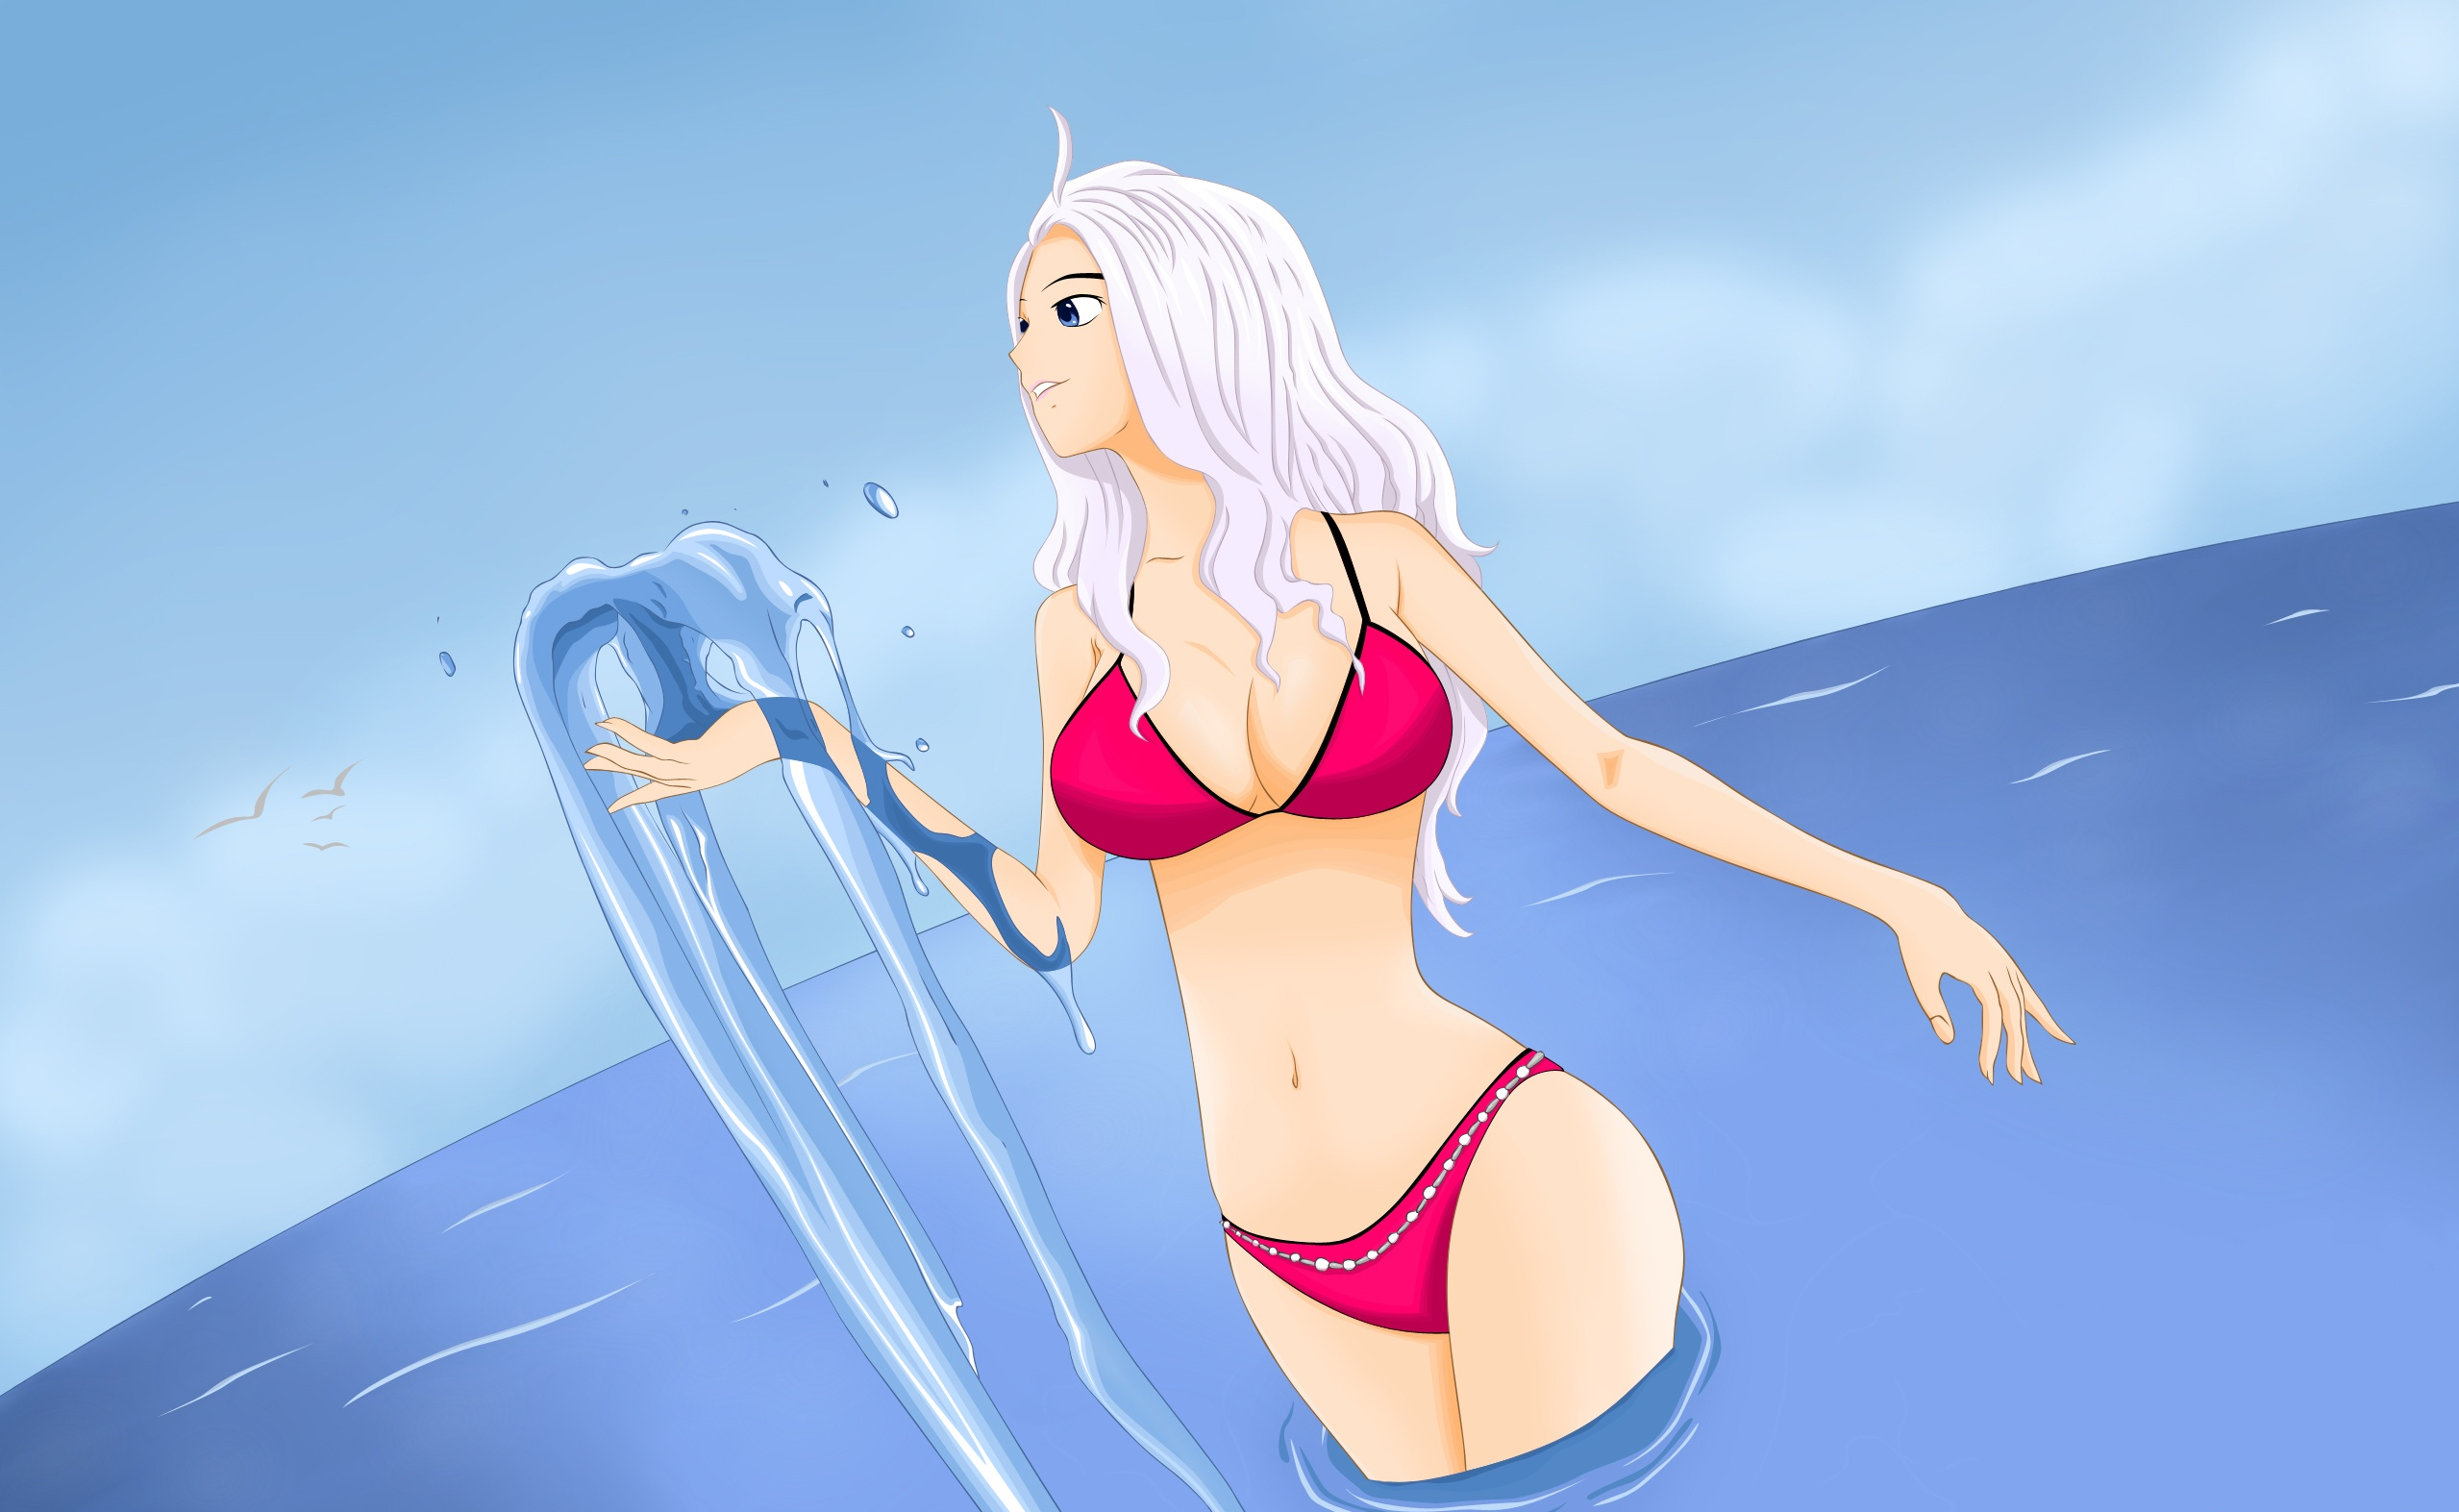 Mirajane Strauss from Fairy Tail - Anime desktop wallpaper by Shimazaki